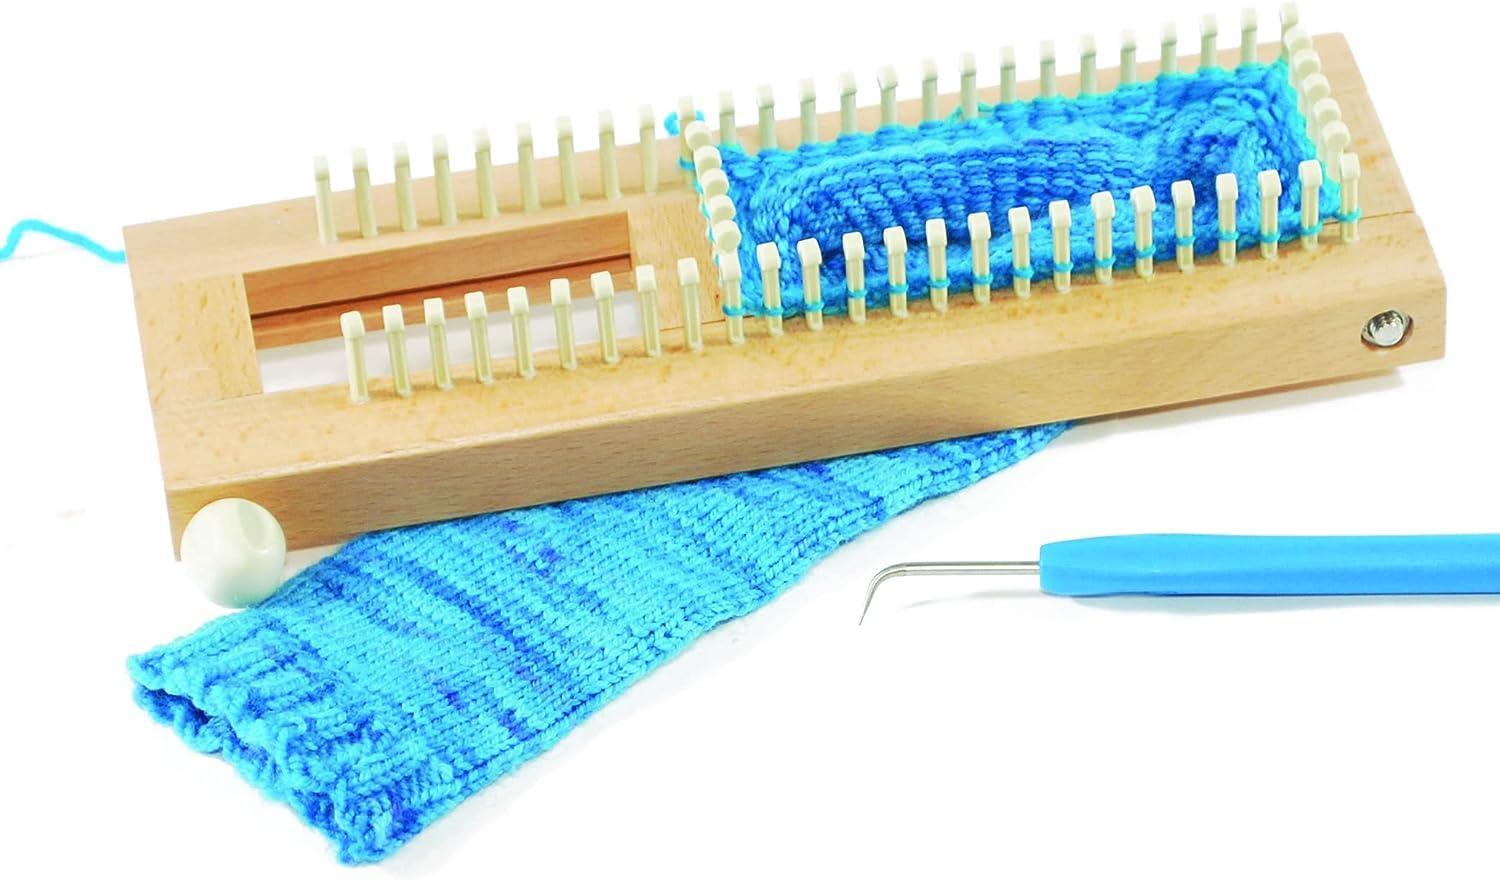 Authentic Knitting Board Loom Knitting Basics Kit, BRAND NEW